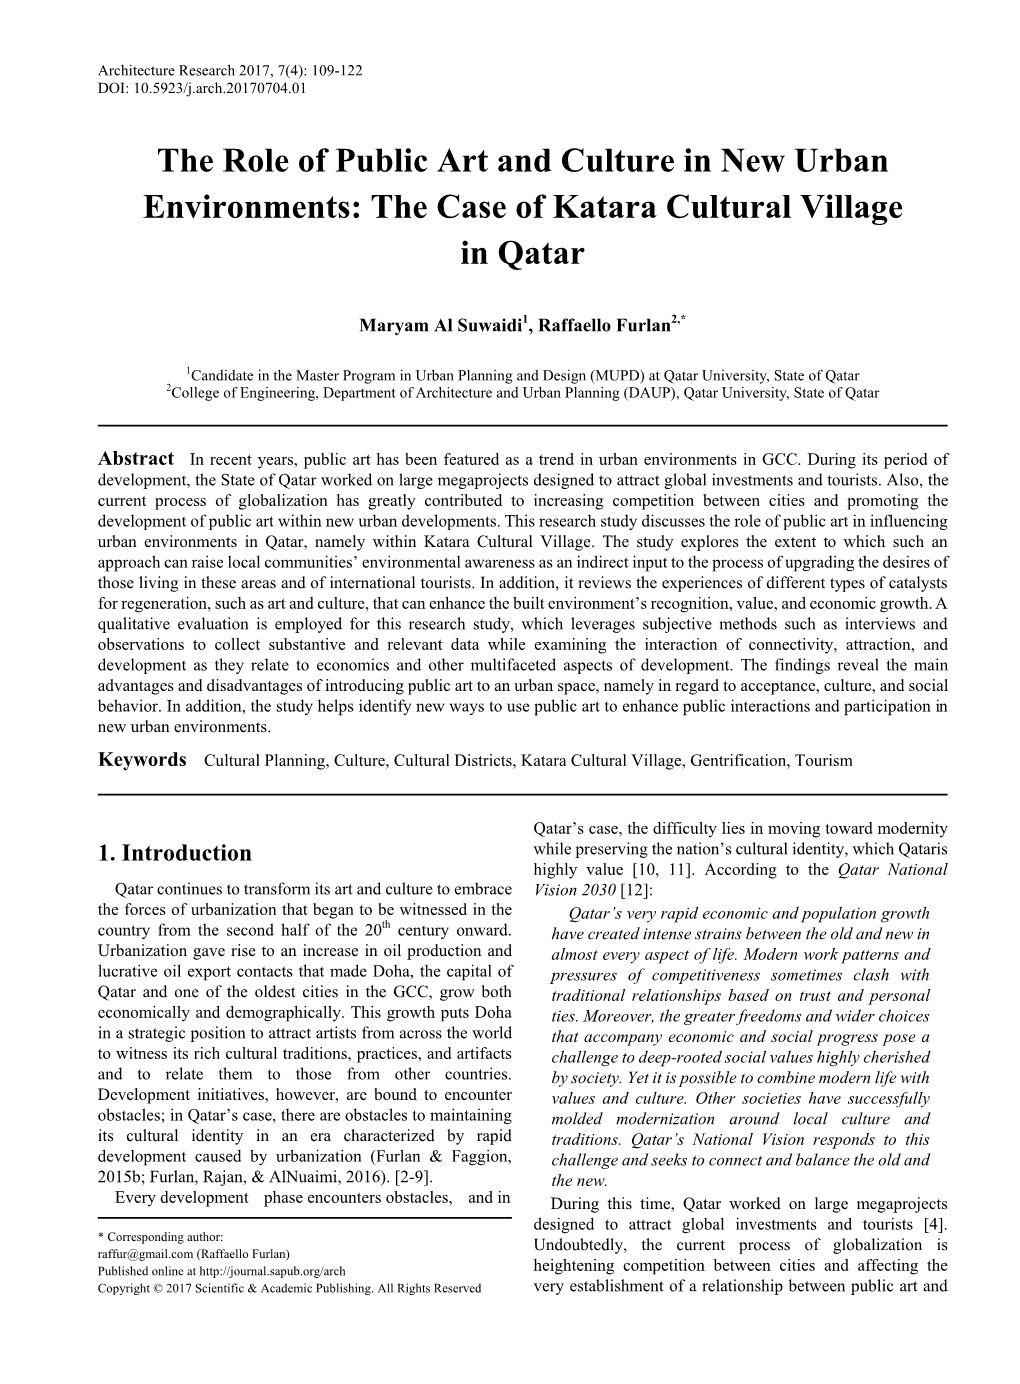 The Case of Katara Cultural Village in Qatar